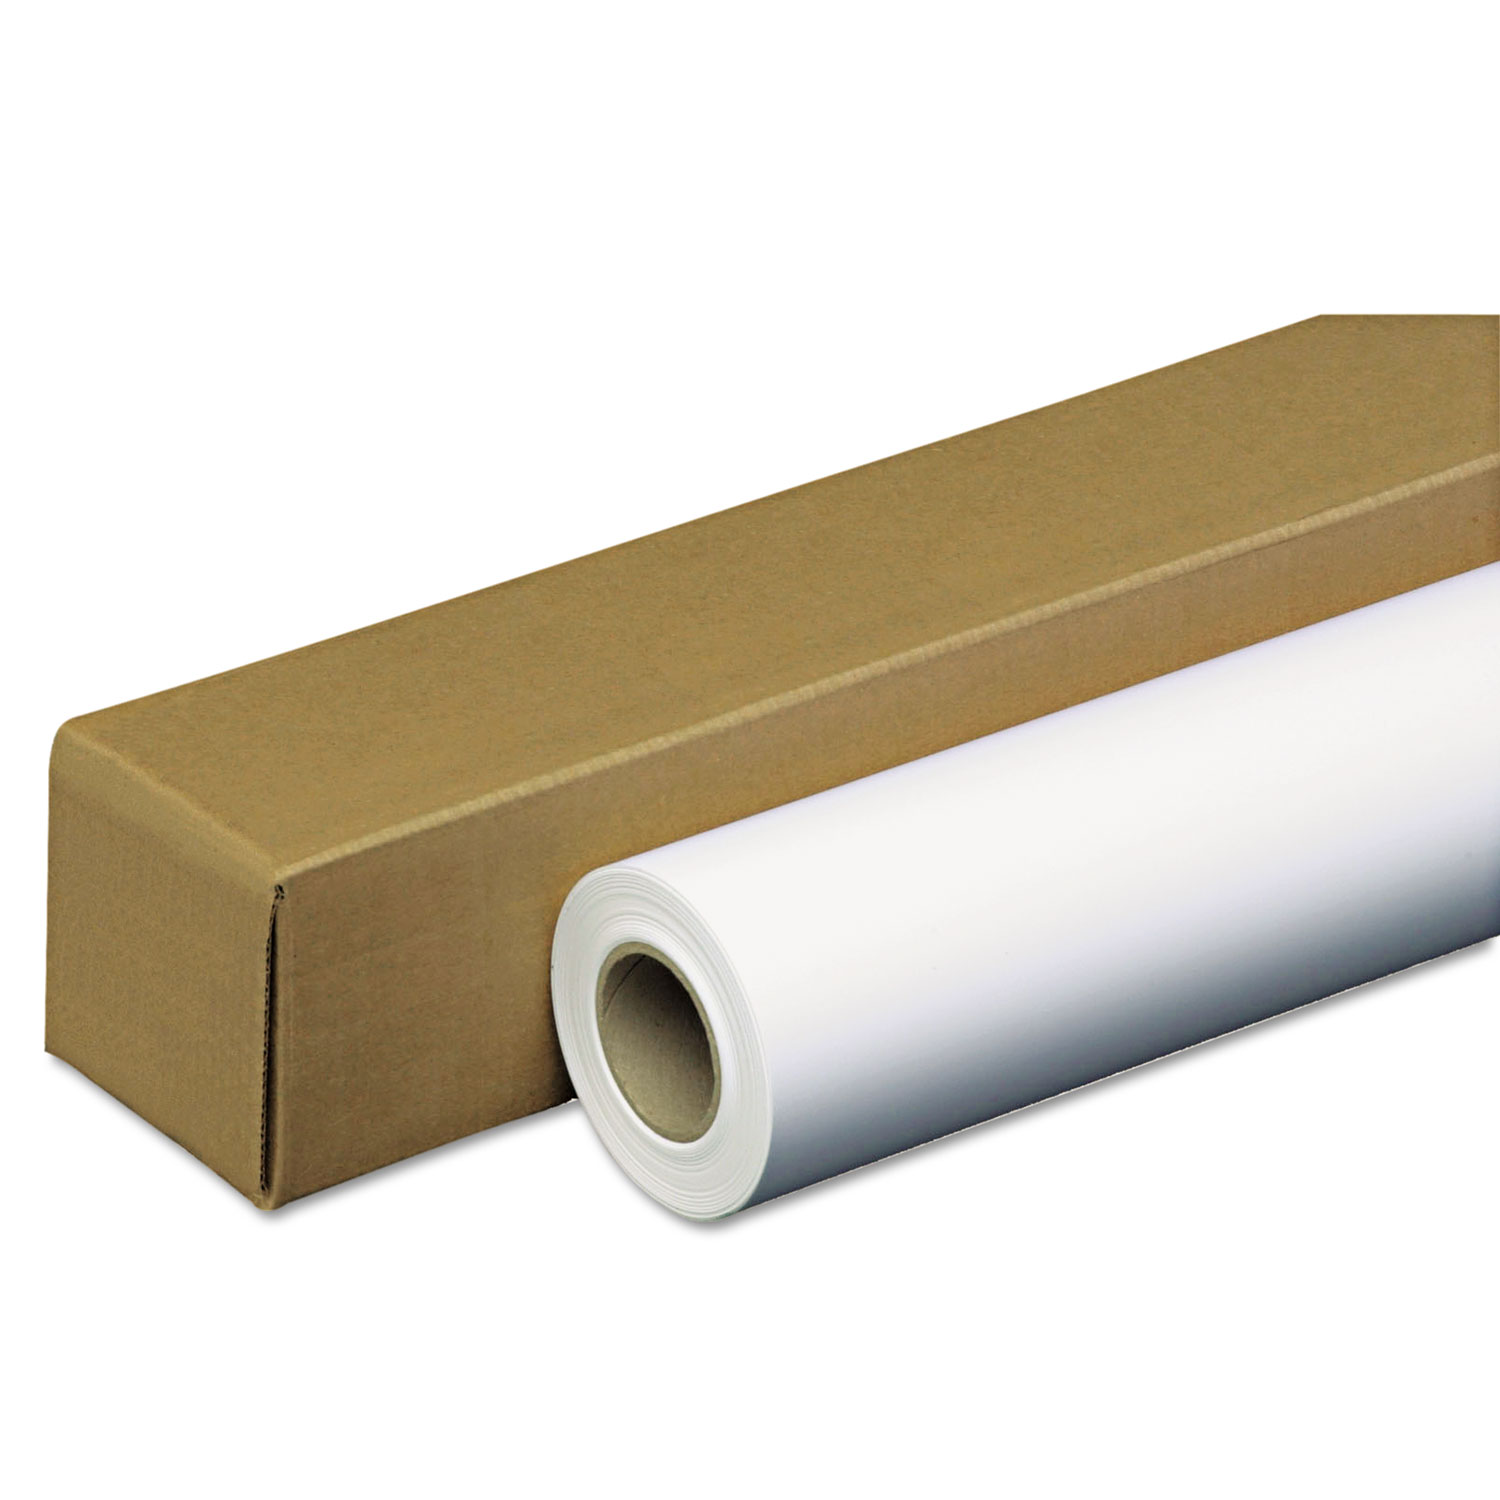  Iconex 46142 Amerigo Wide-Format Paper, 2 Core, 35 lb, 42 x 100 ft, Coated White (ICX90750218) 